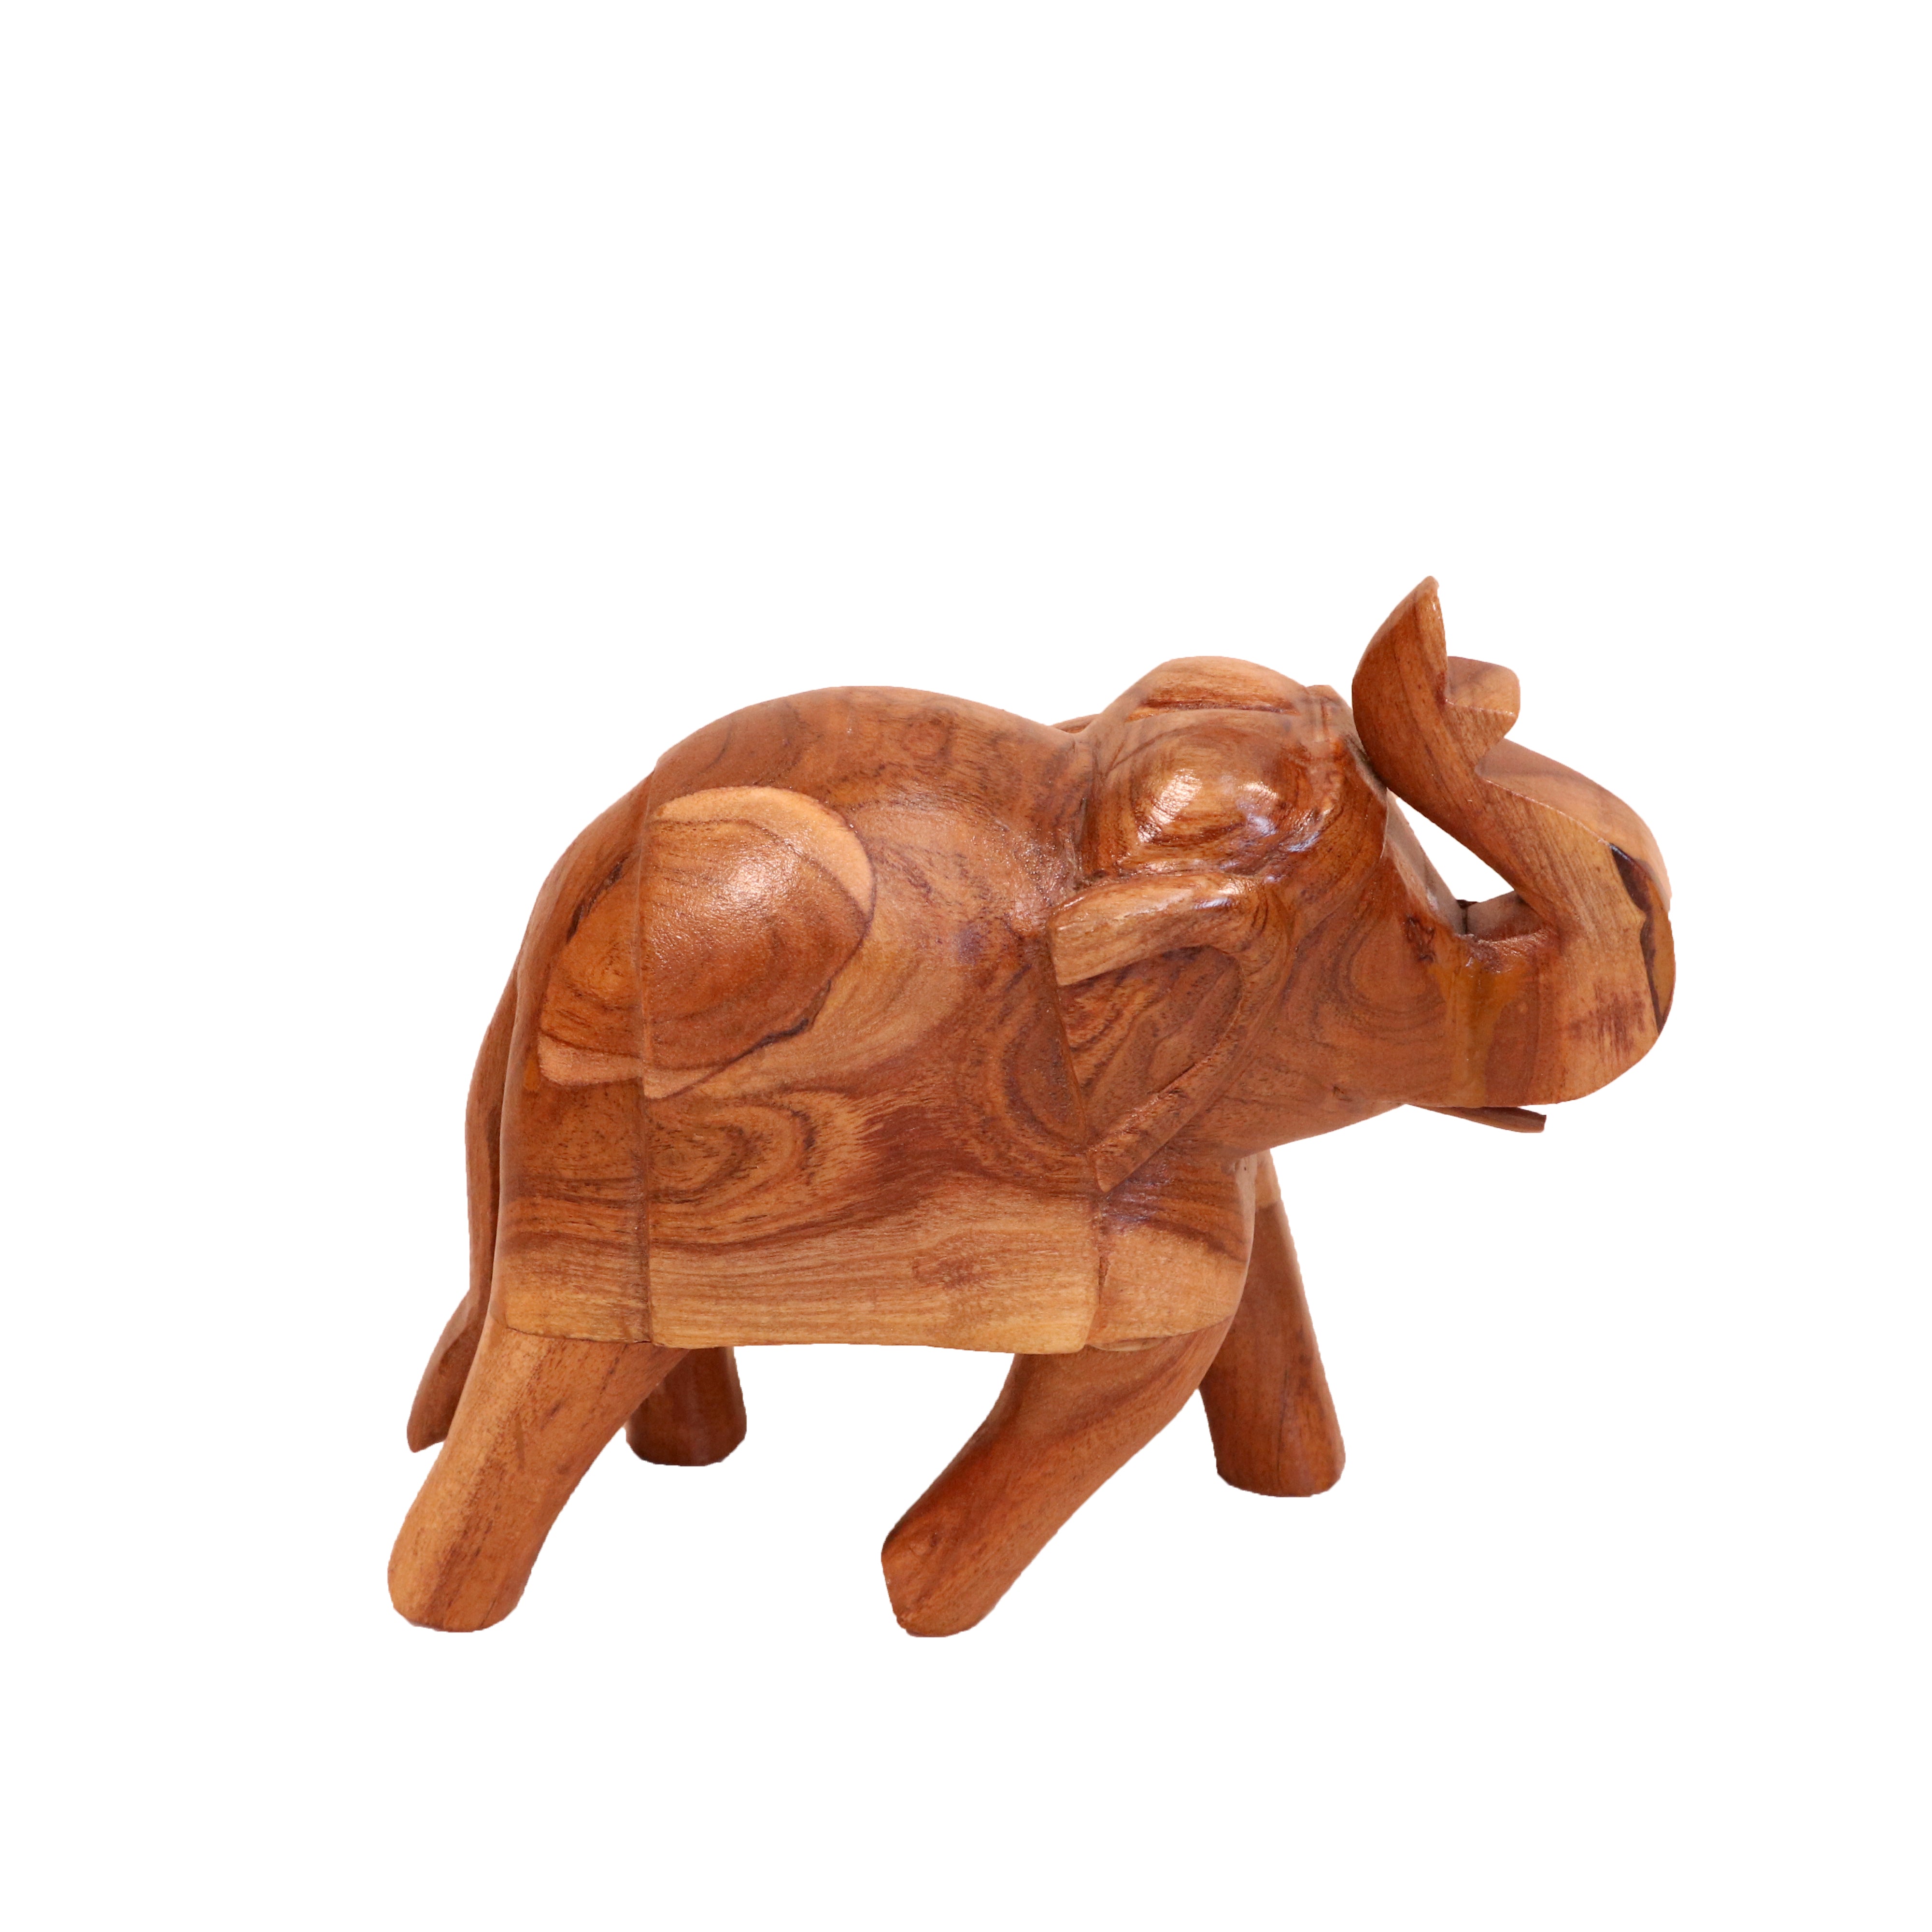 Walking Wooden Carved Decor Elephant Animal Figurine